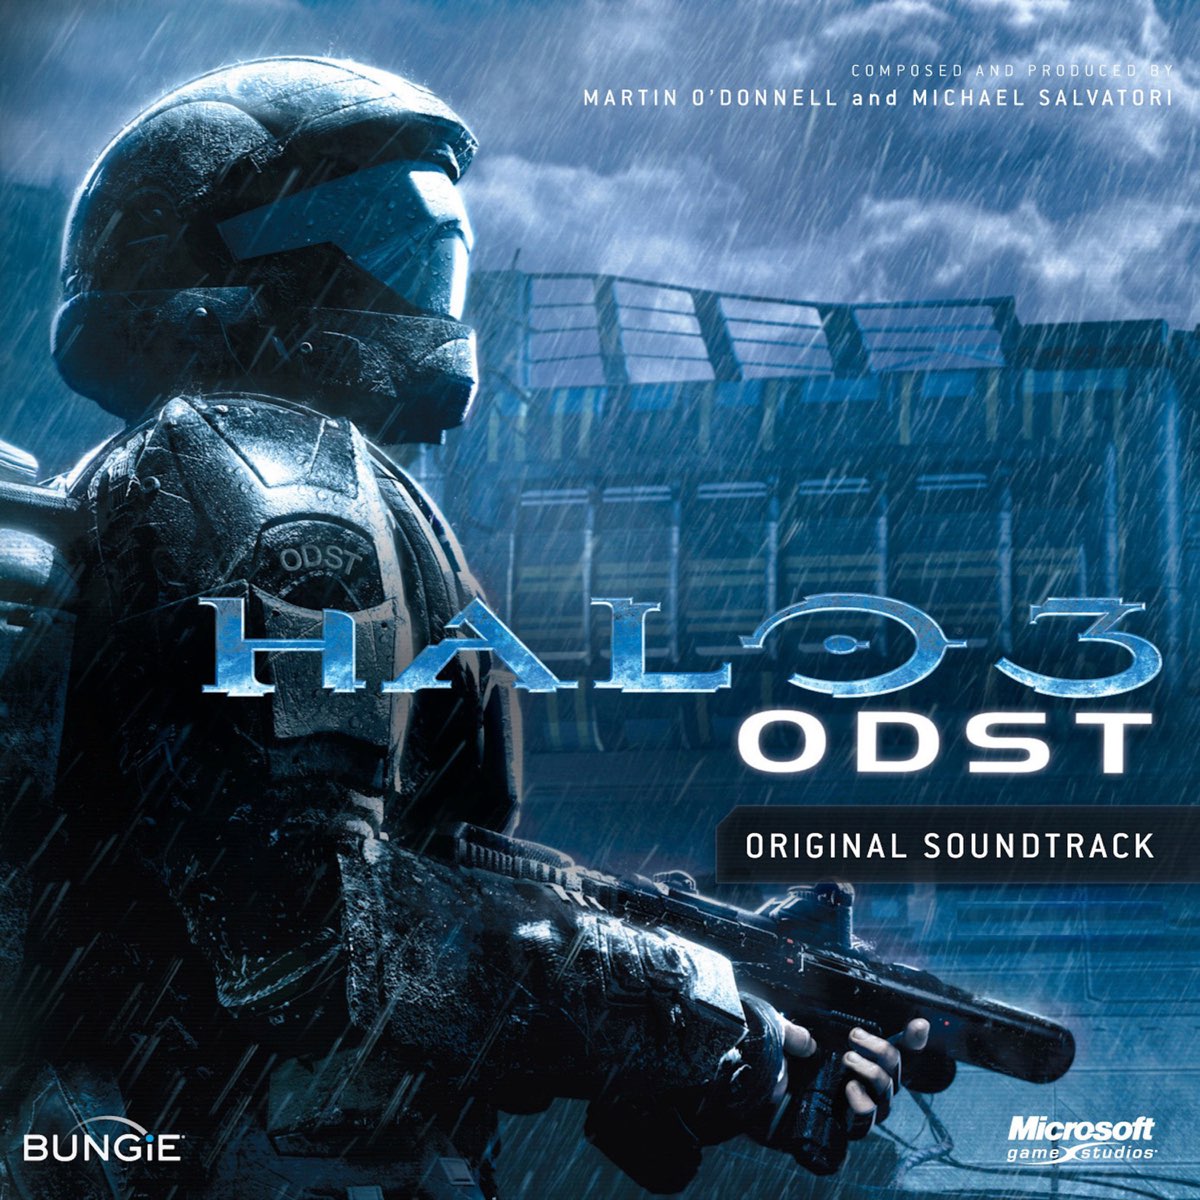 Comprar Halo 3 - Microsoft Store pt-ST